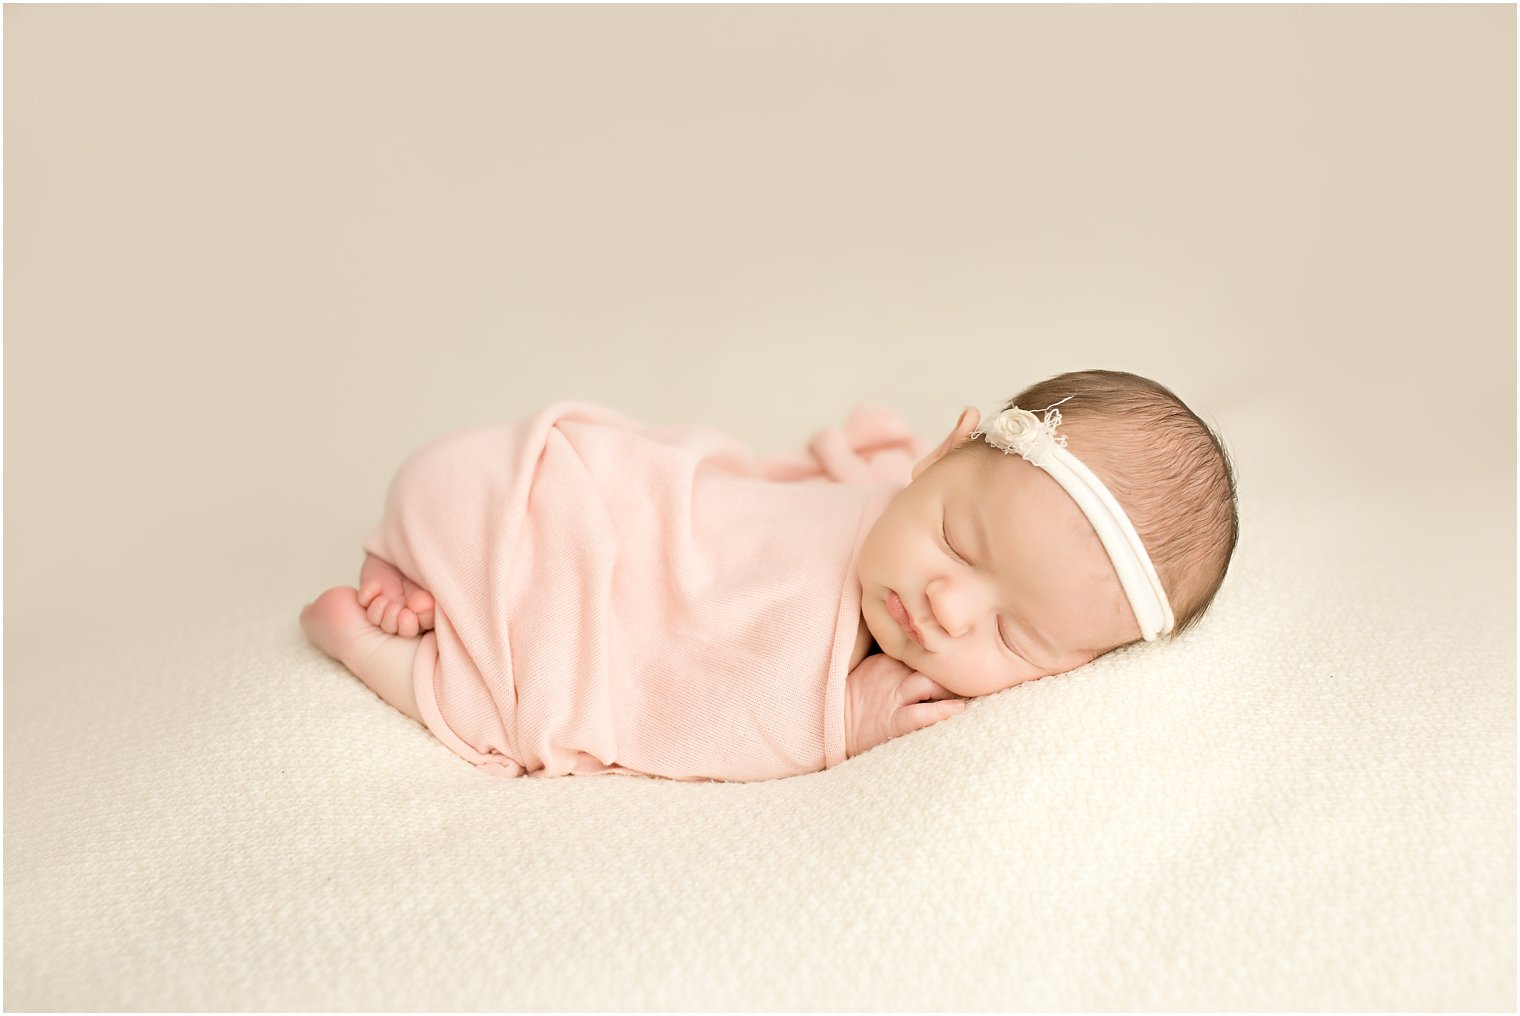 Pretty in Pink Newborn Session by Idalia Photography